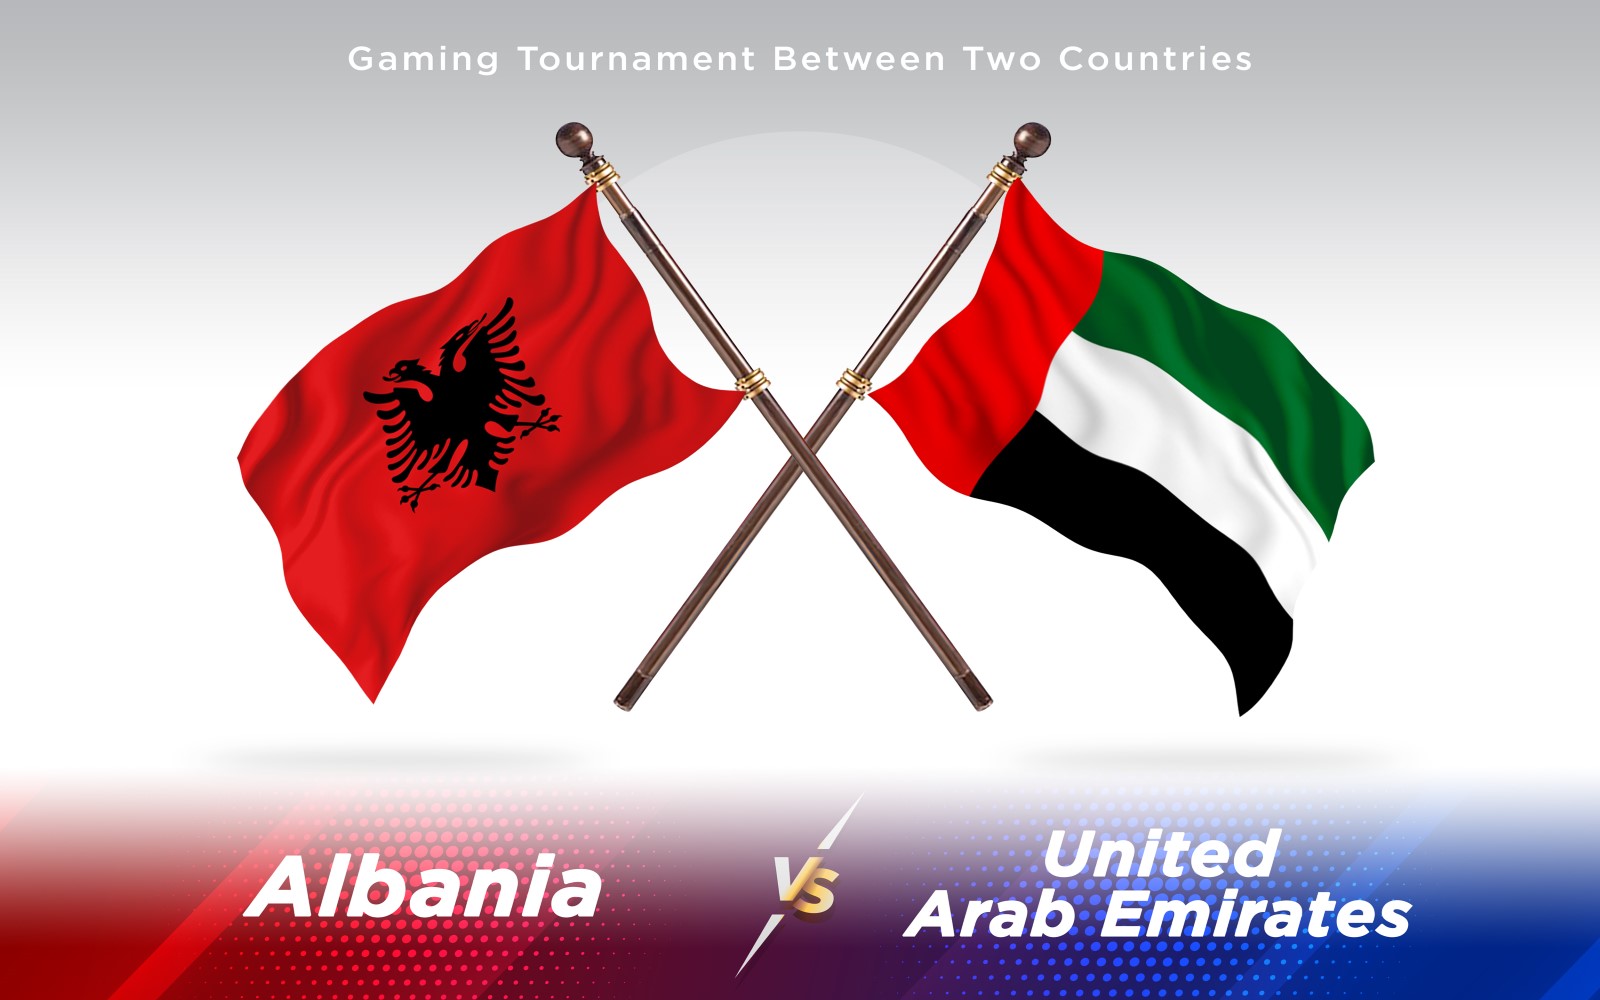 Albania versus United Arab Emirates Two Countries Flags - Illustration